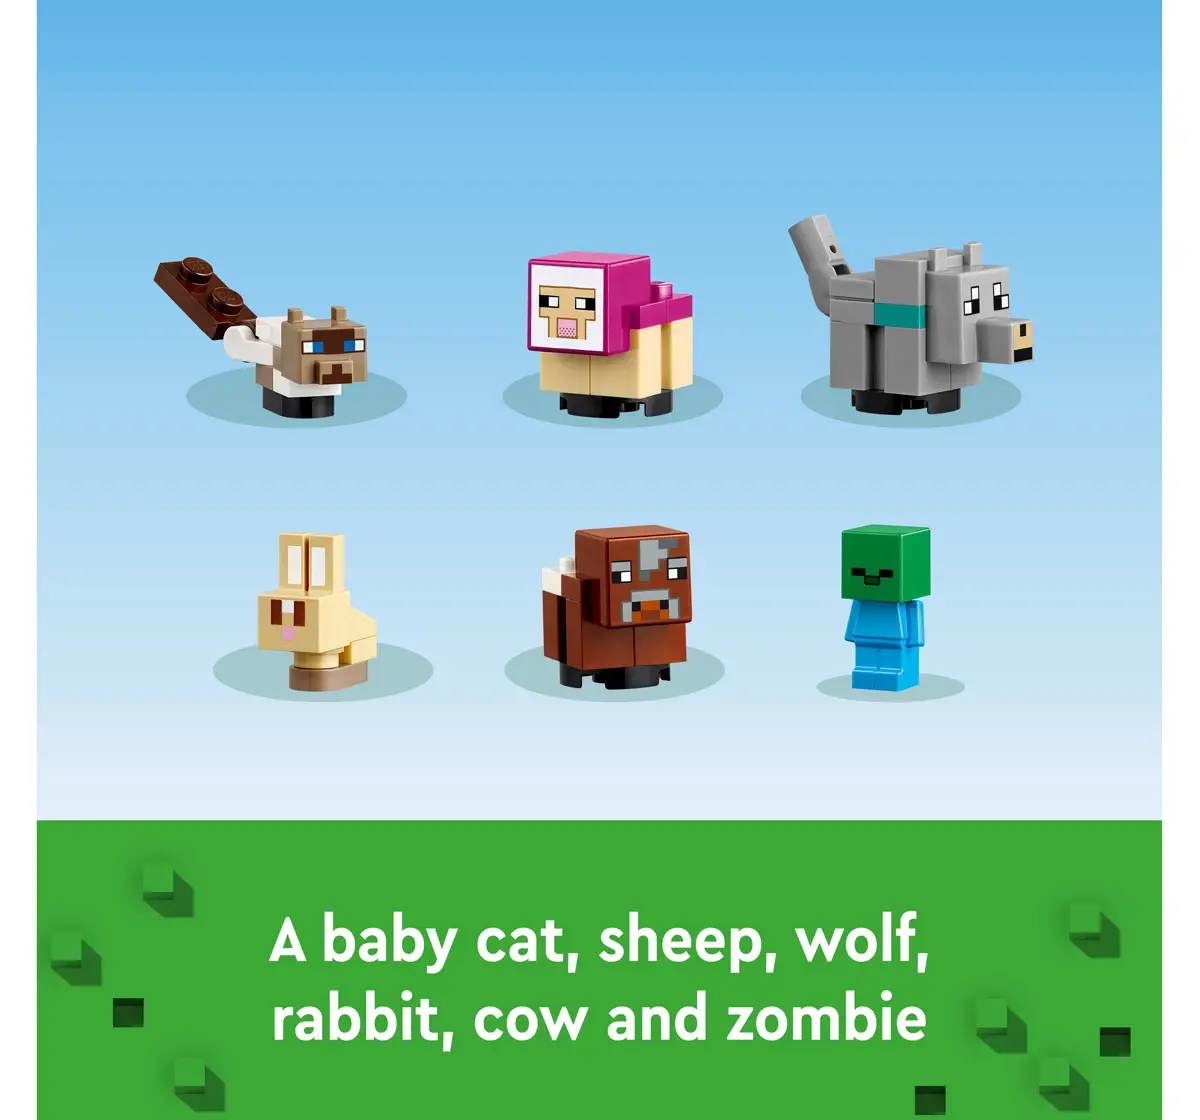 Lego Minecraft The Animal Sanctuary Set 21253 Multicolour For Kids Ages 7Y+ (206 Pieces) 